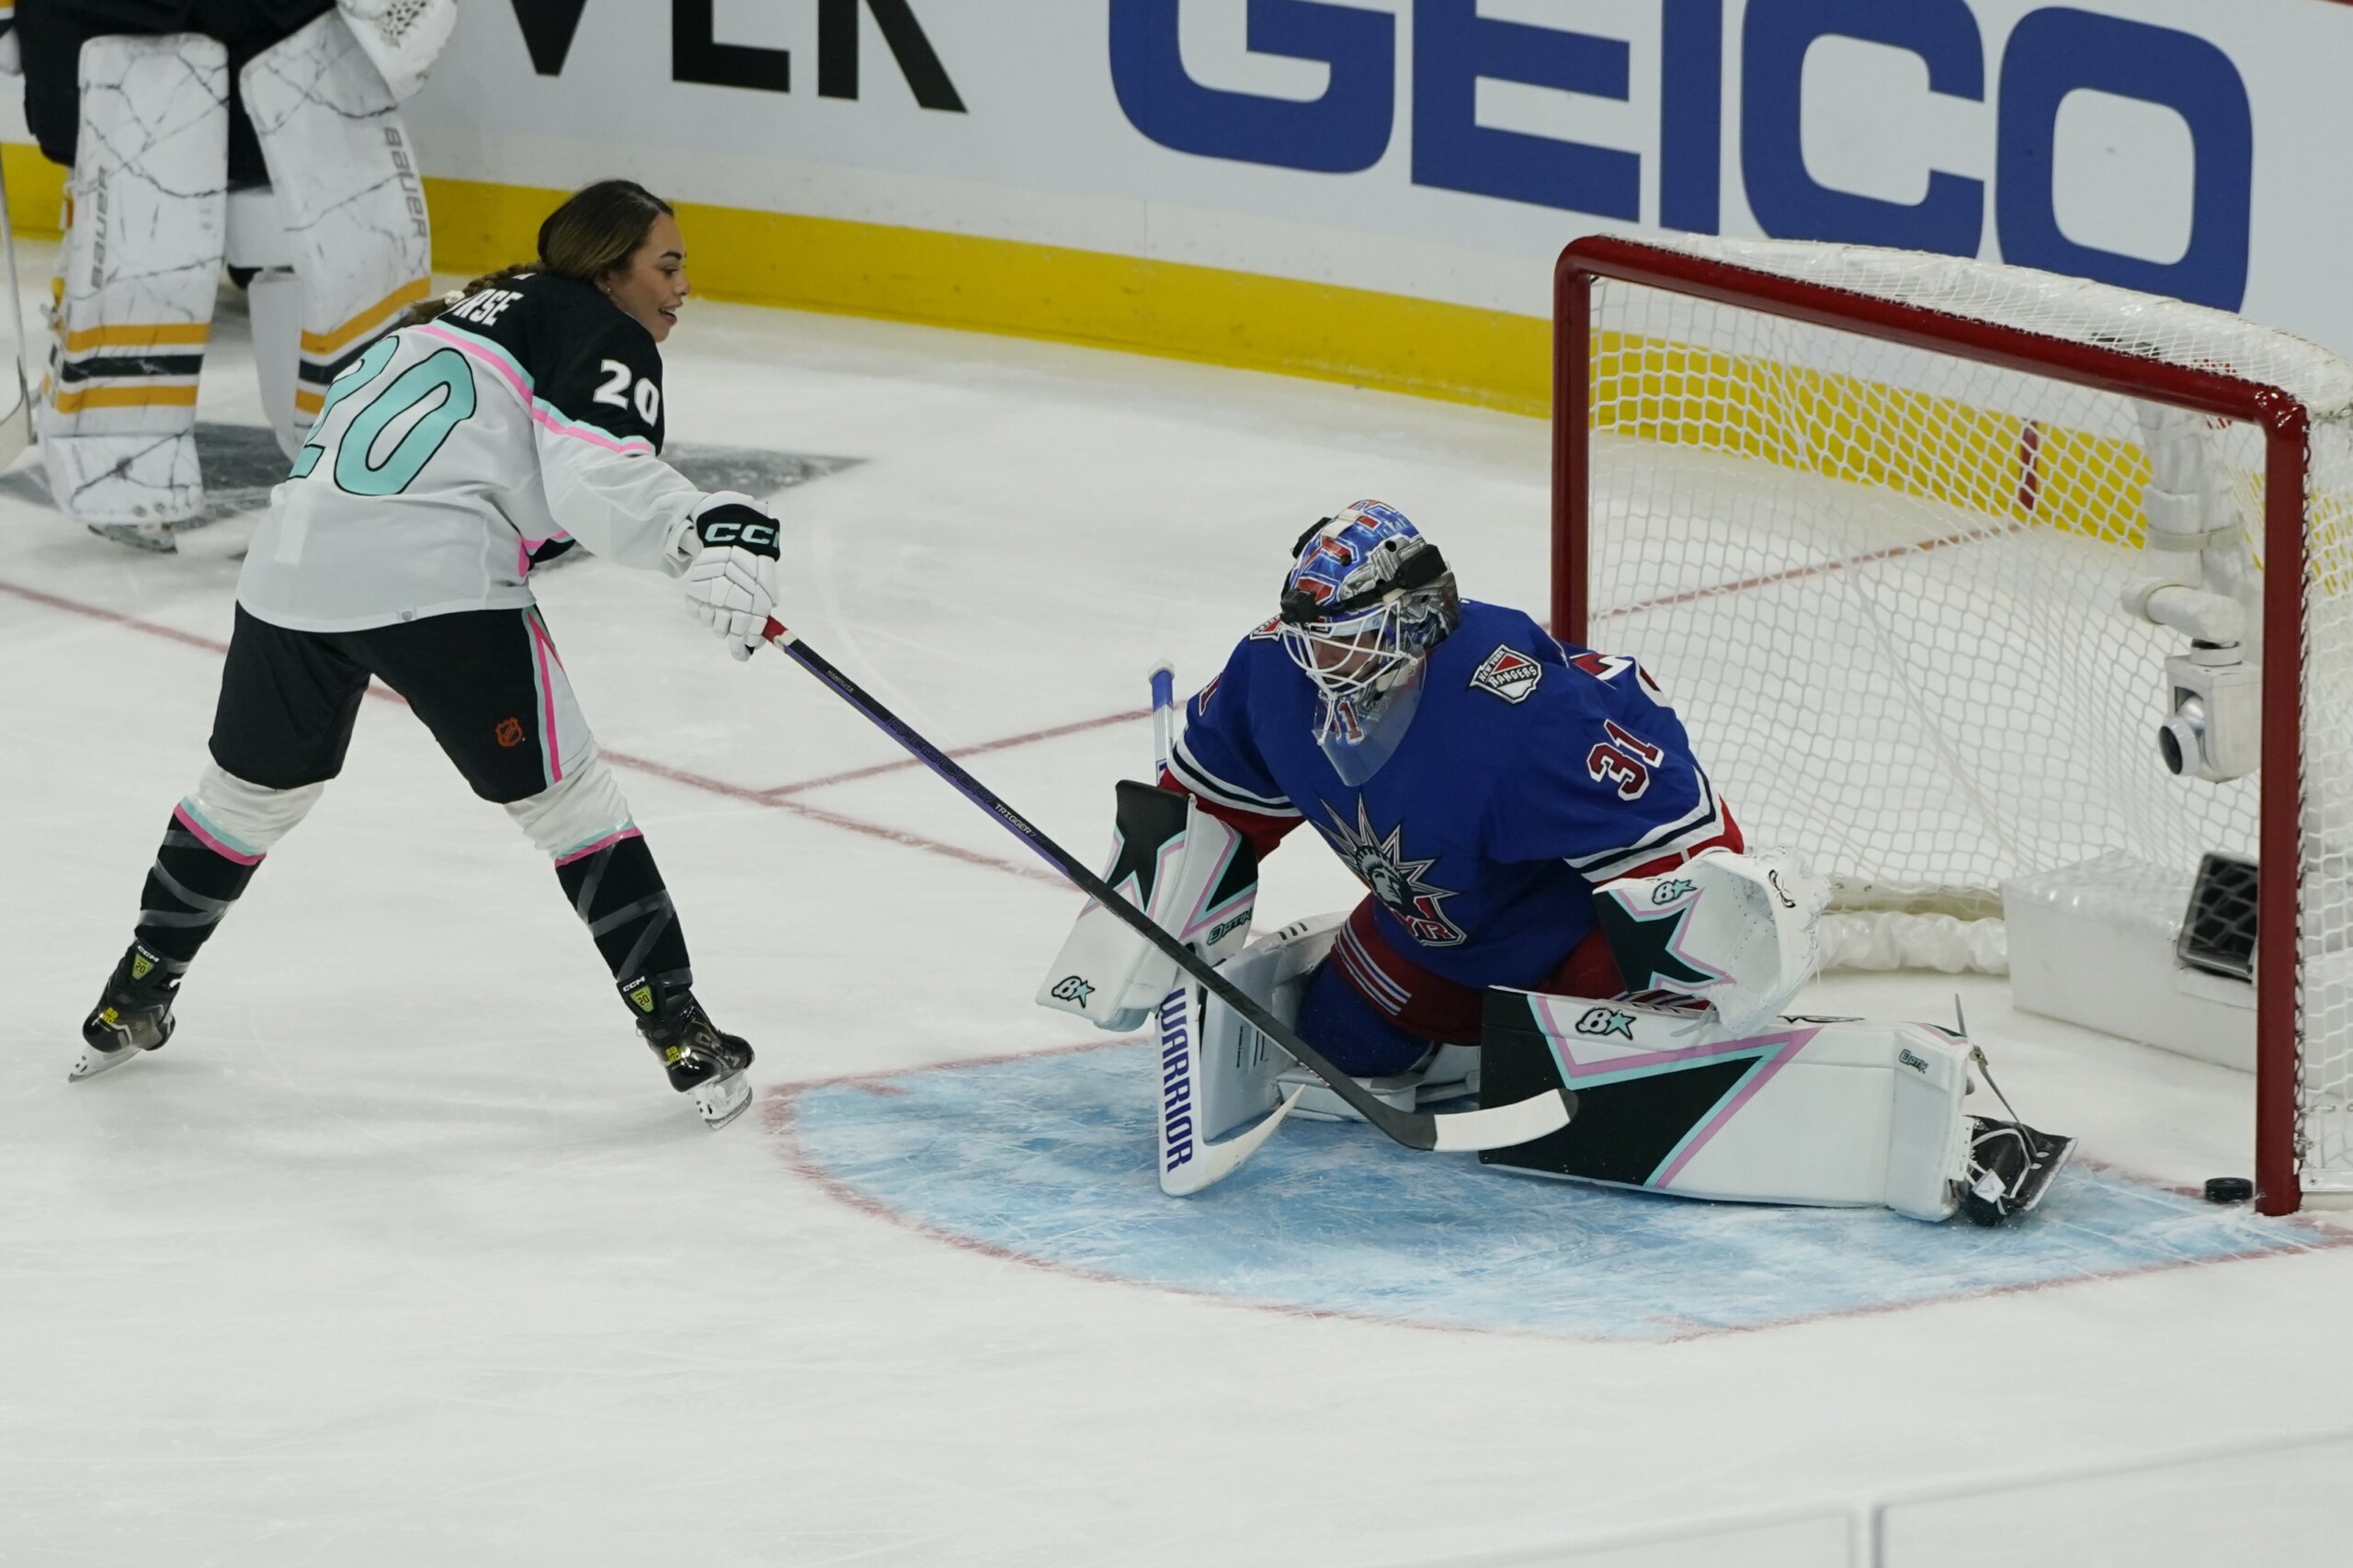 Panthers offer Sarah Nurse deal to lead girls hockey program